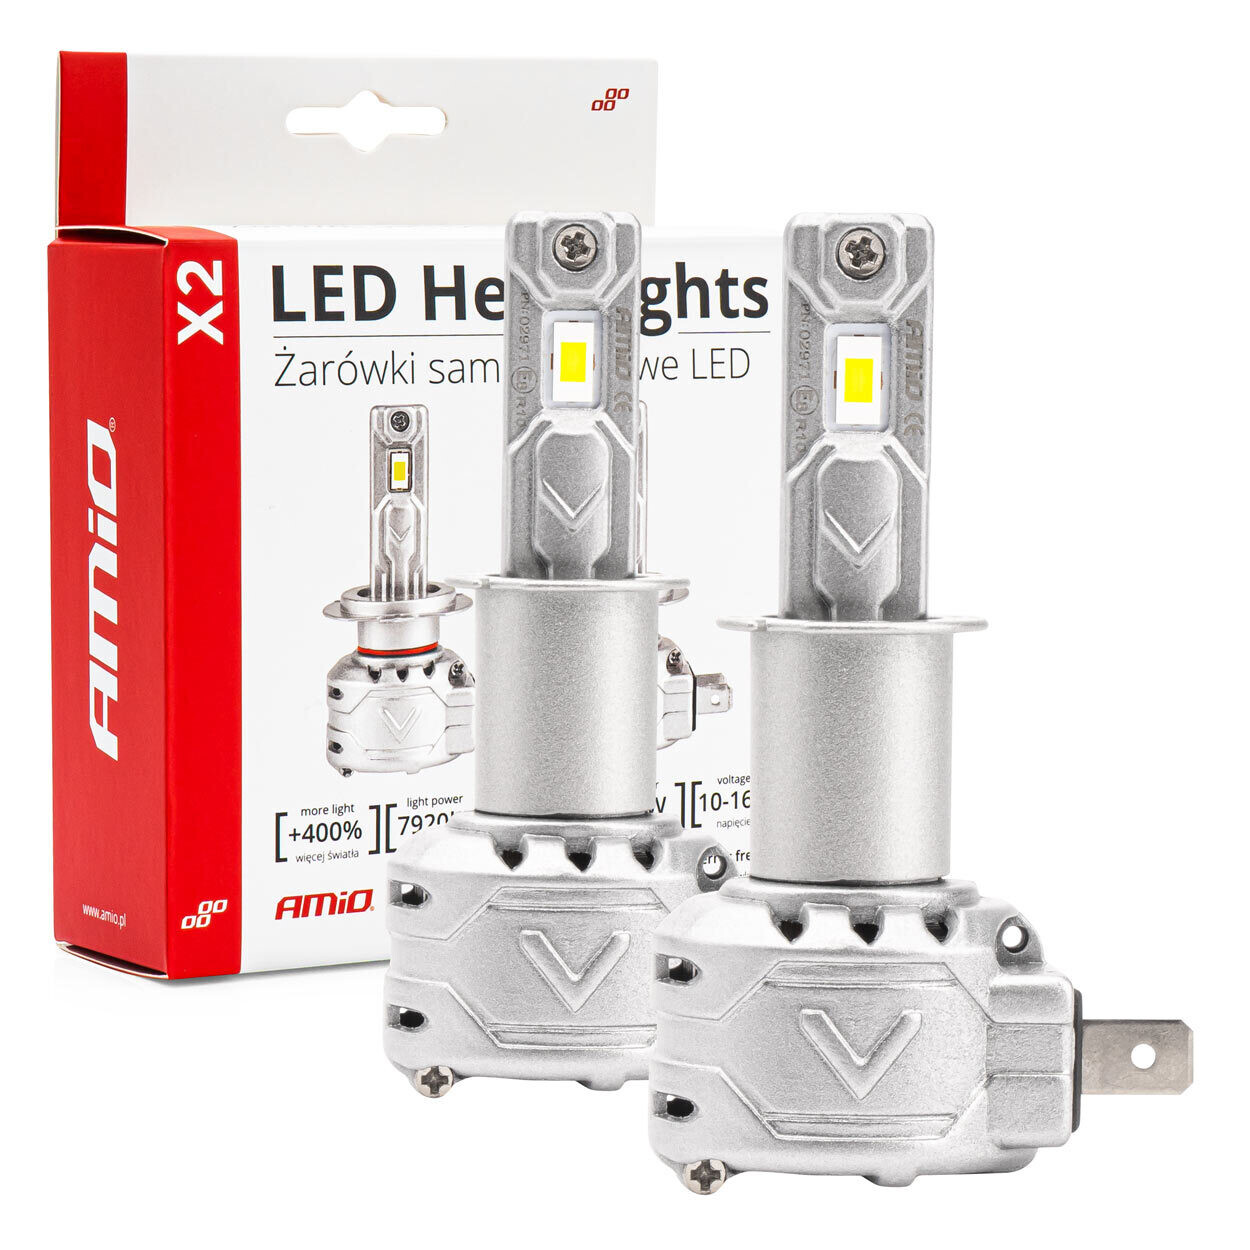 LED Headlight H3 X2 Series AMiO